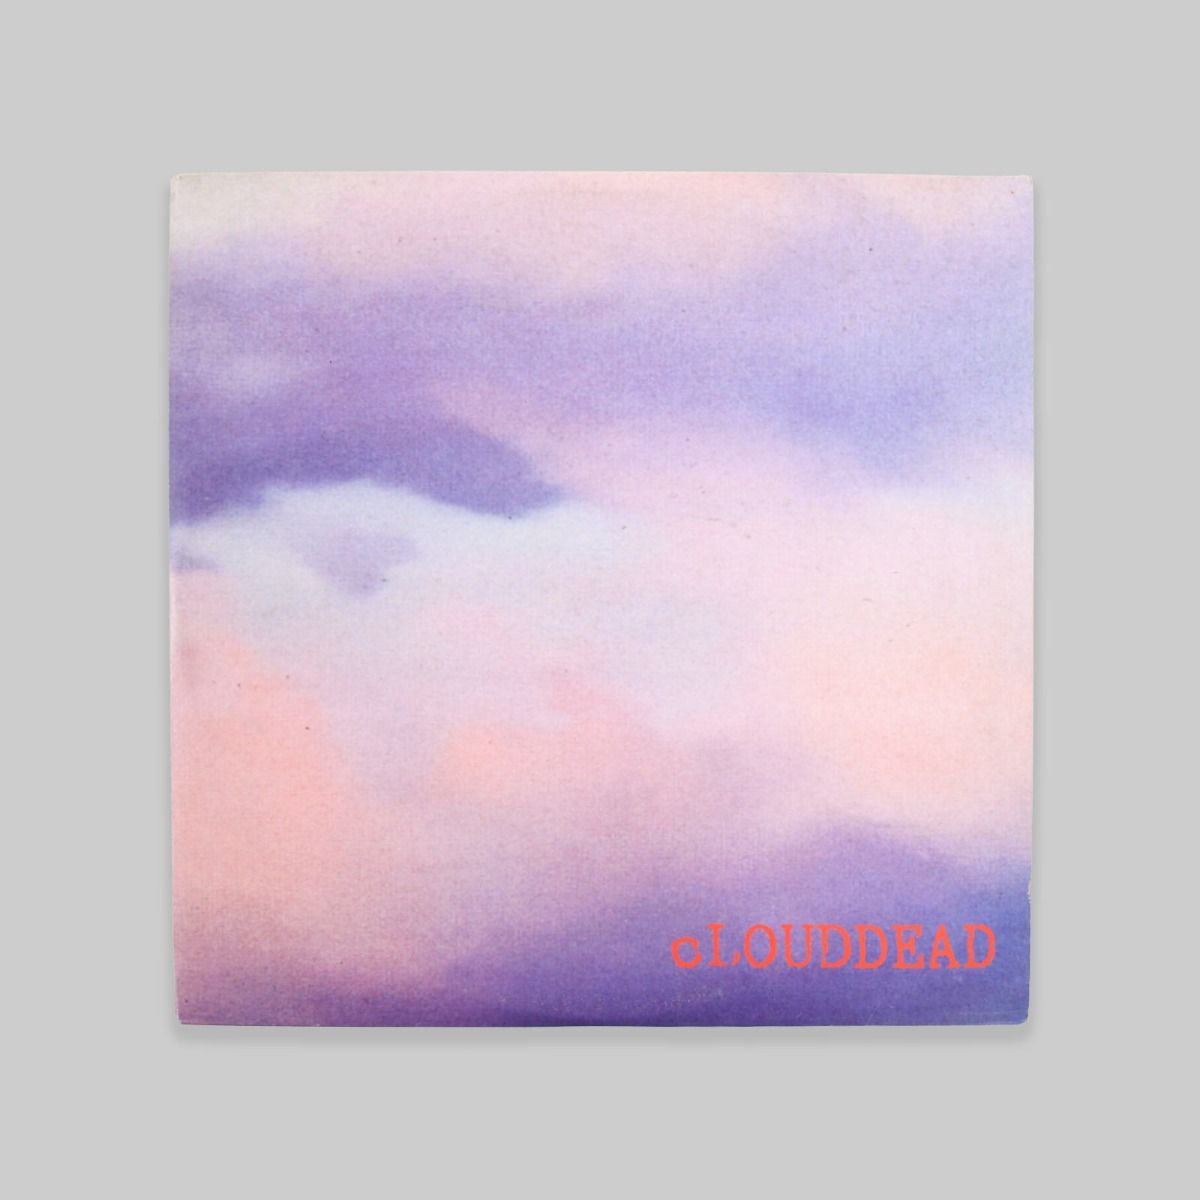 cLOUDDEAD – cLOUDDEAD 3x12" LP